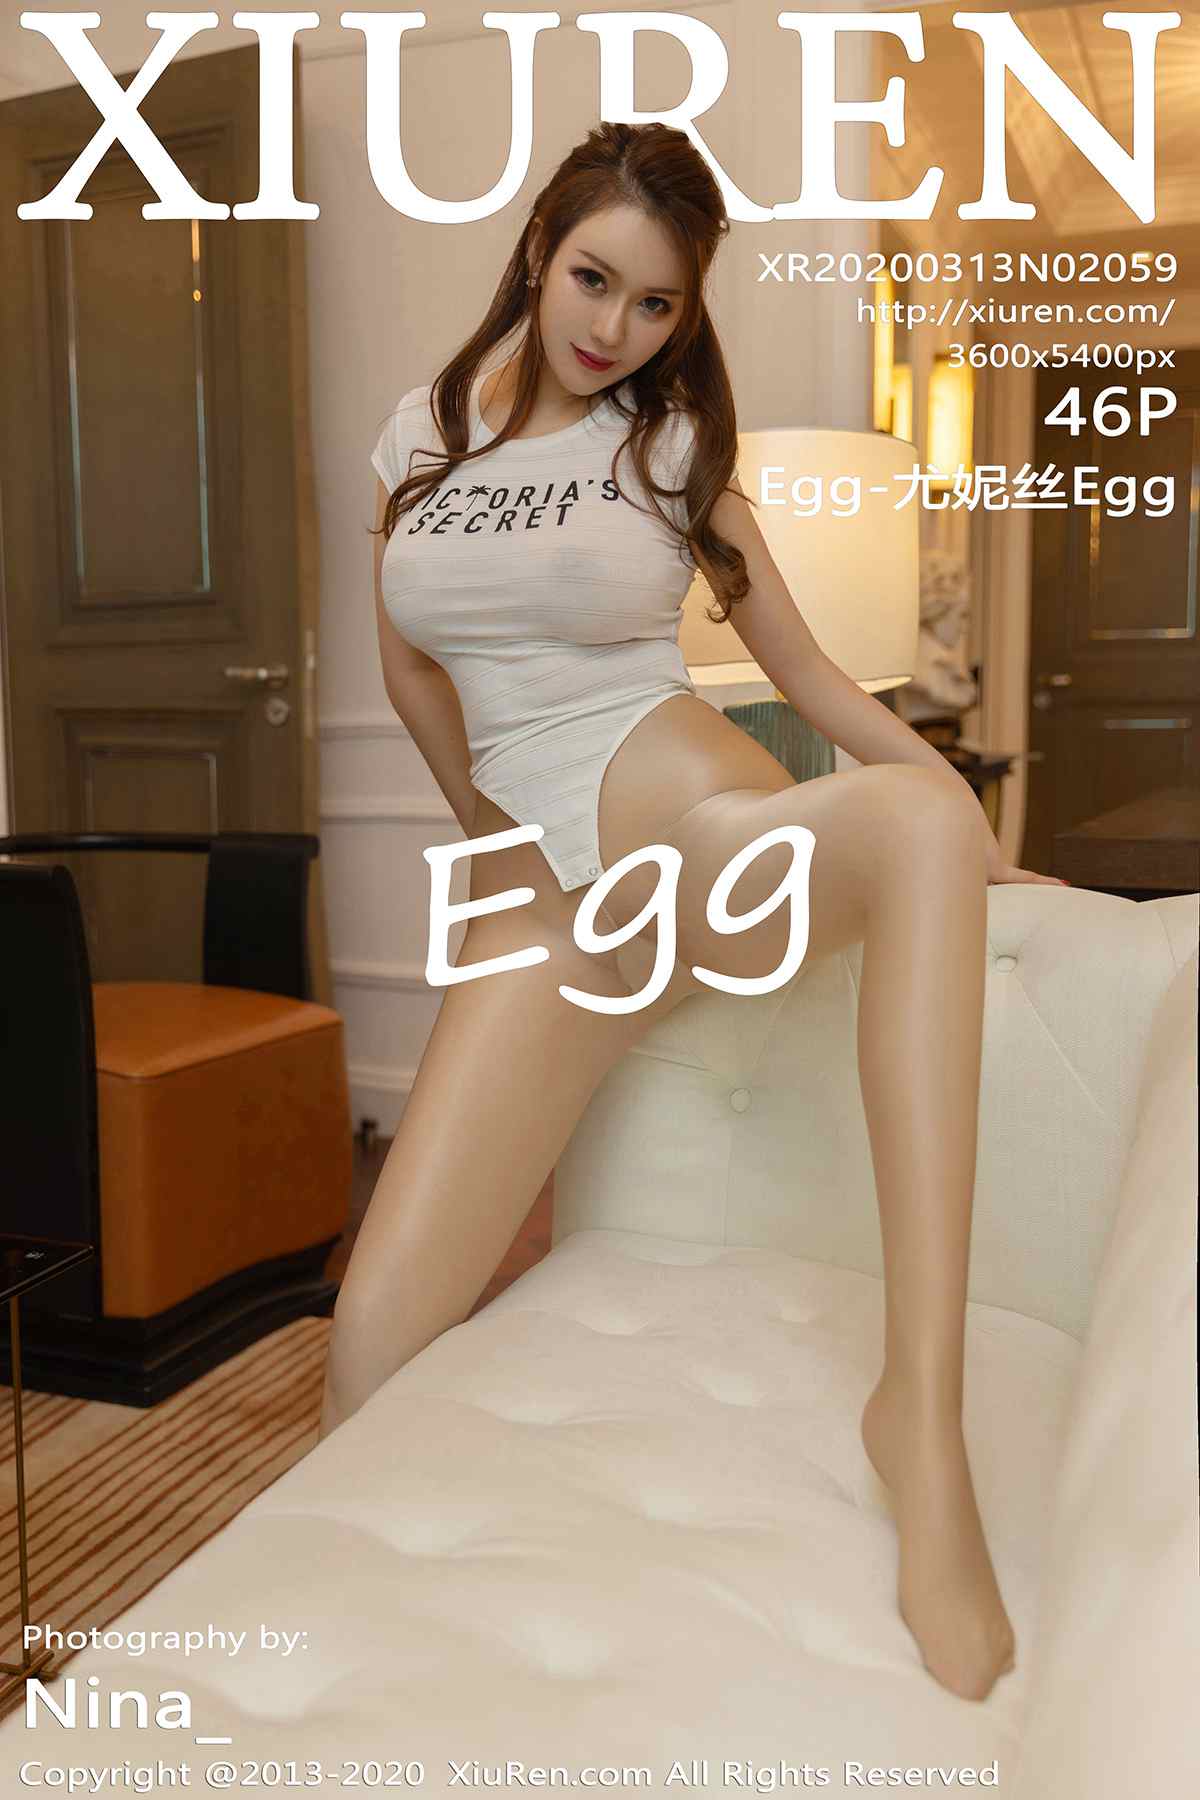 [XiuRen秀人网] 2020.03.13 No.2059 Egg-尤妮丝Egg 巨乳肥臀[46P/168M]